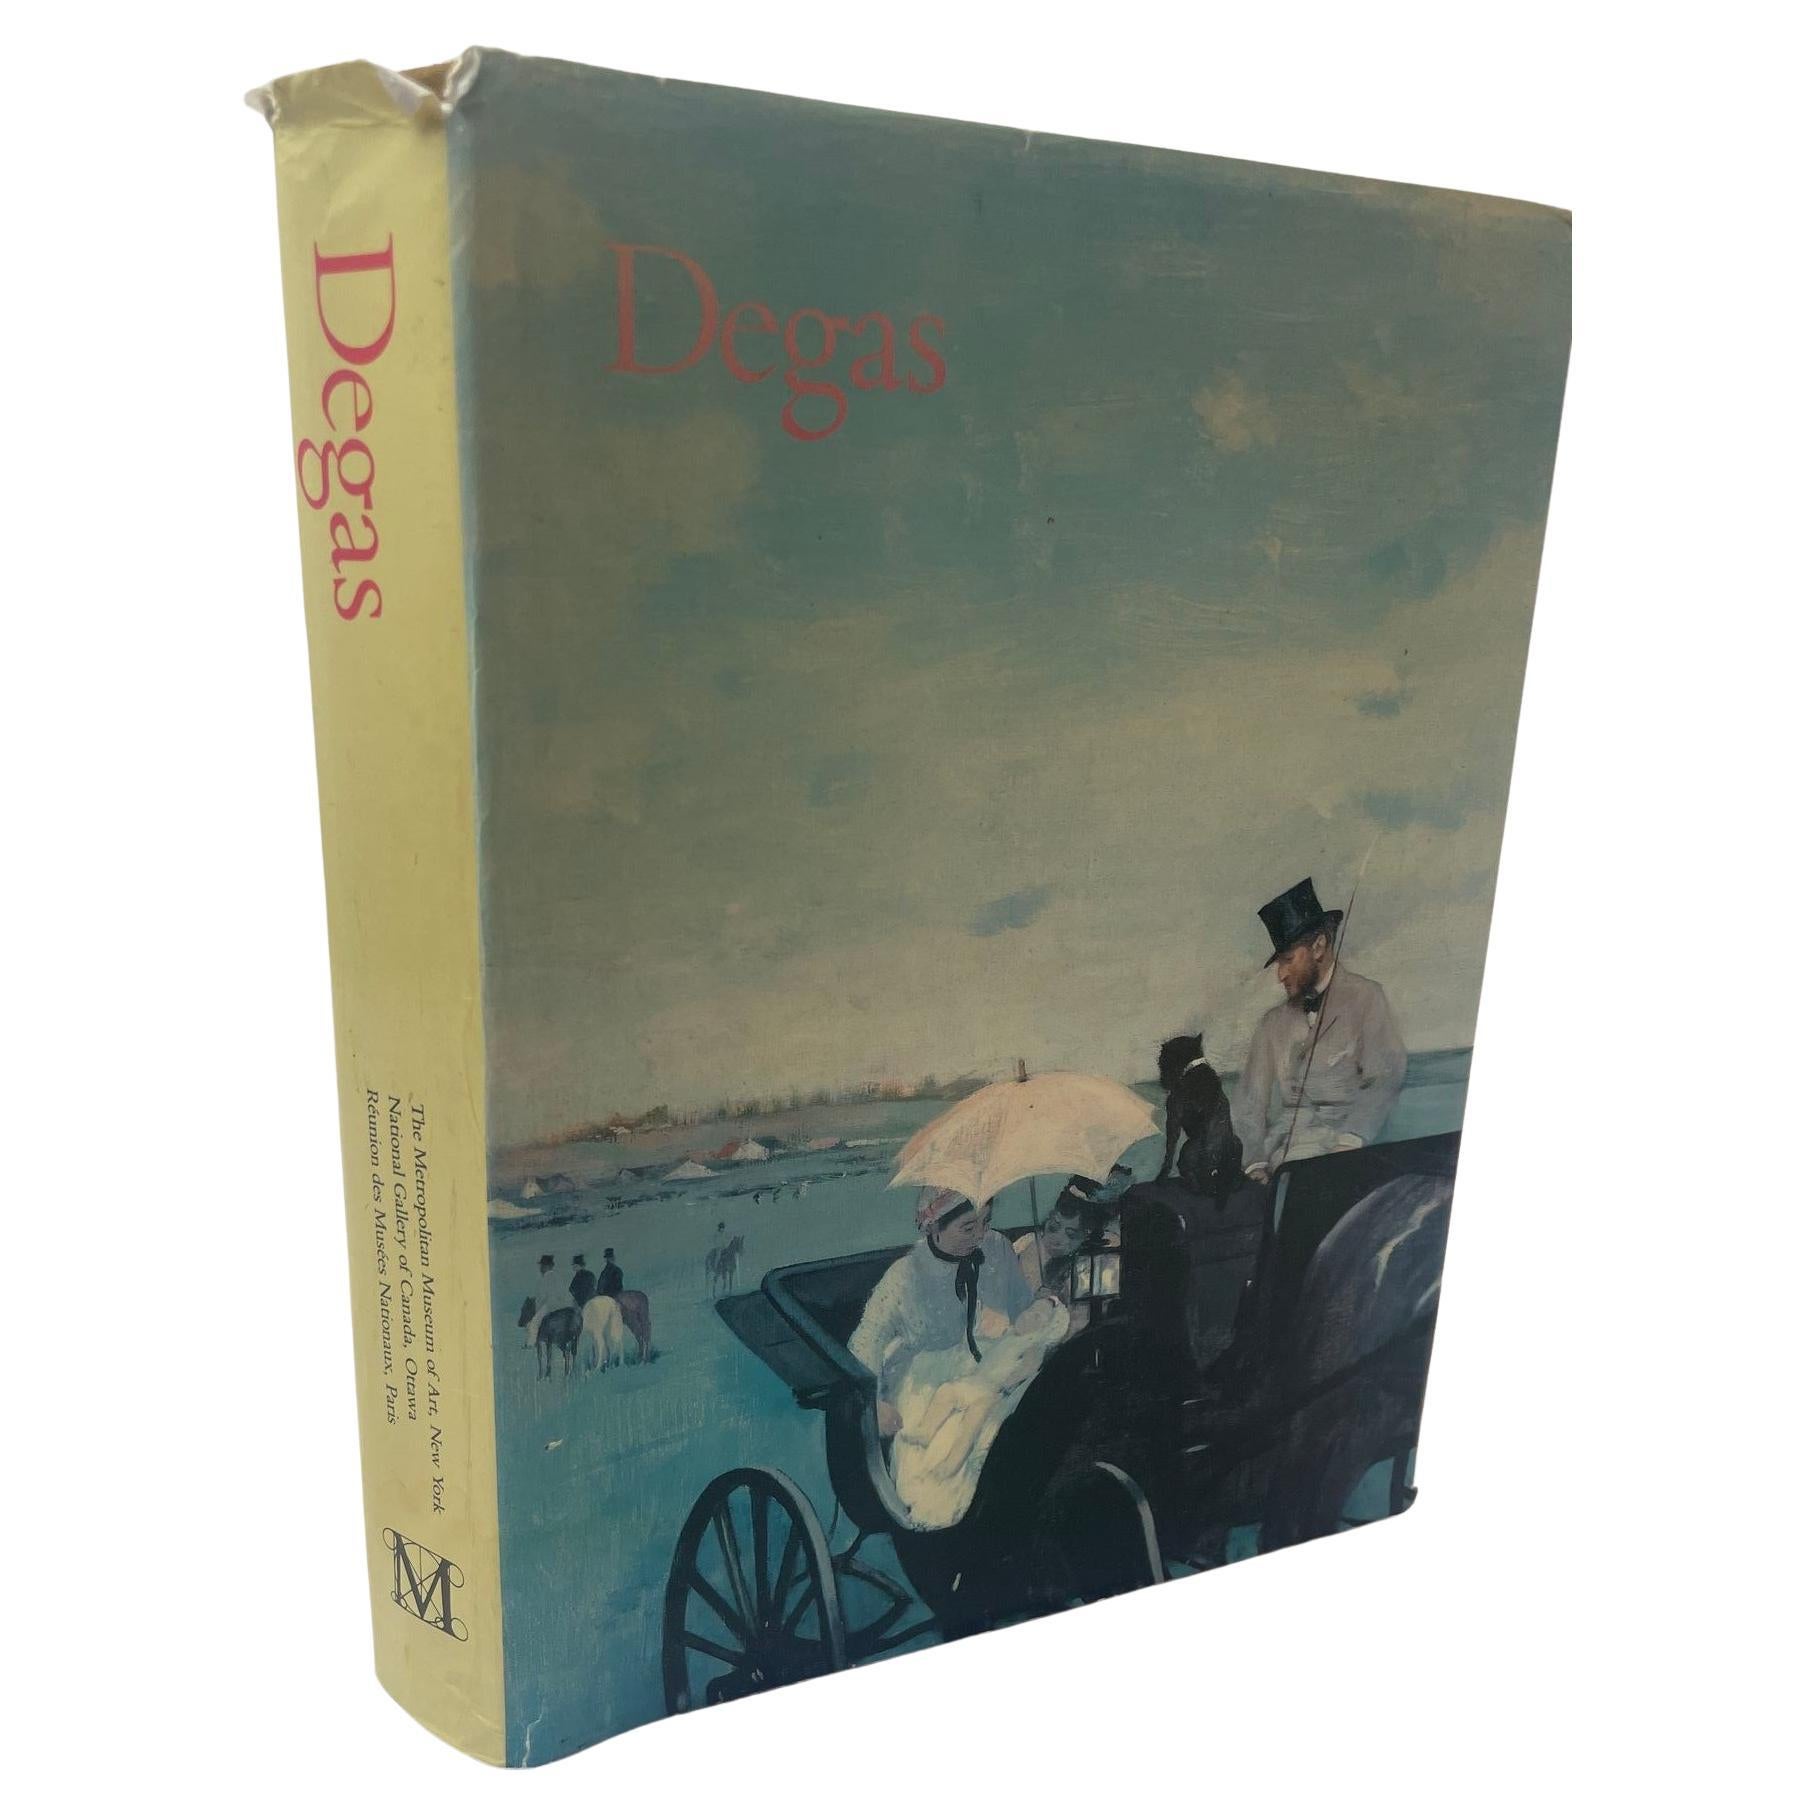 Degas von Jean Sutherland Boggs, Hardcoverbuch Met Museum of Art, 1. Auflage, Met Museum of Art, 1988